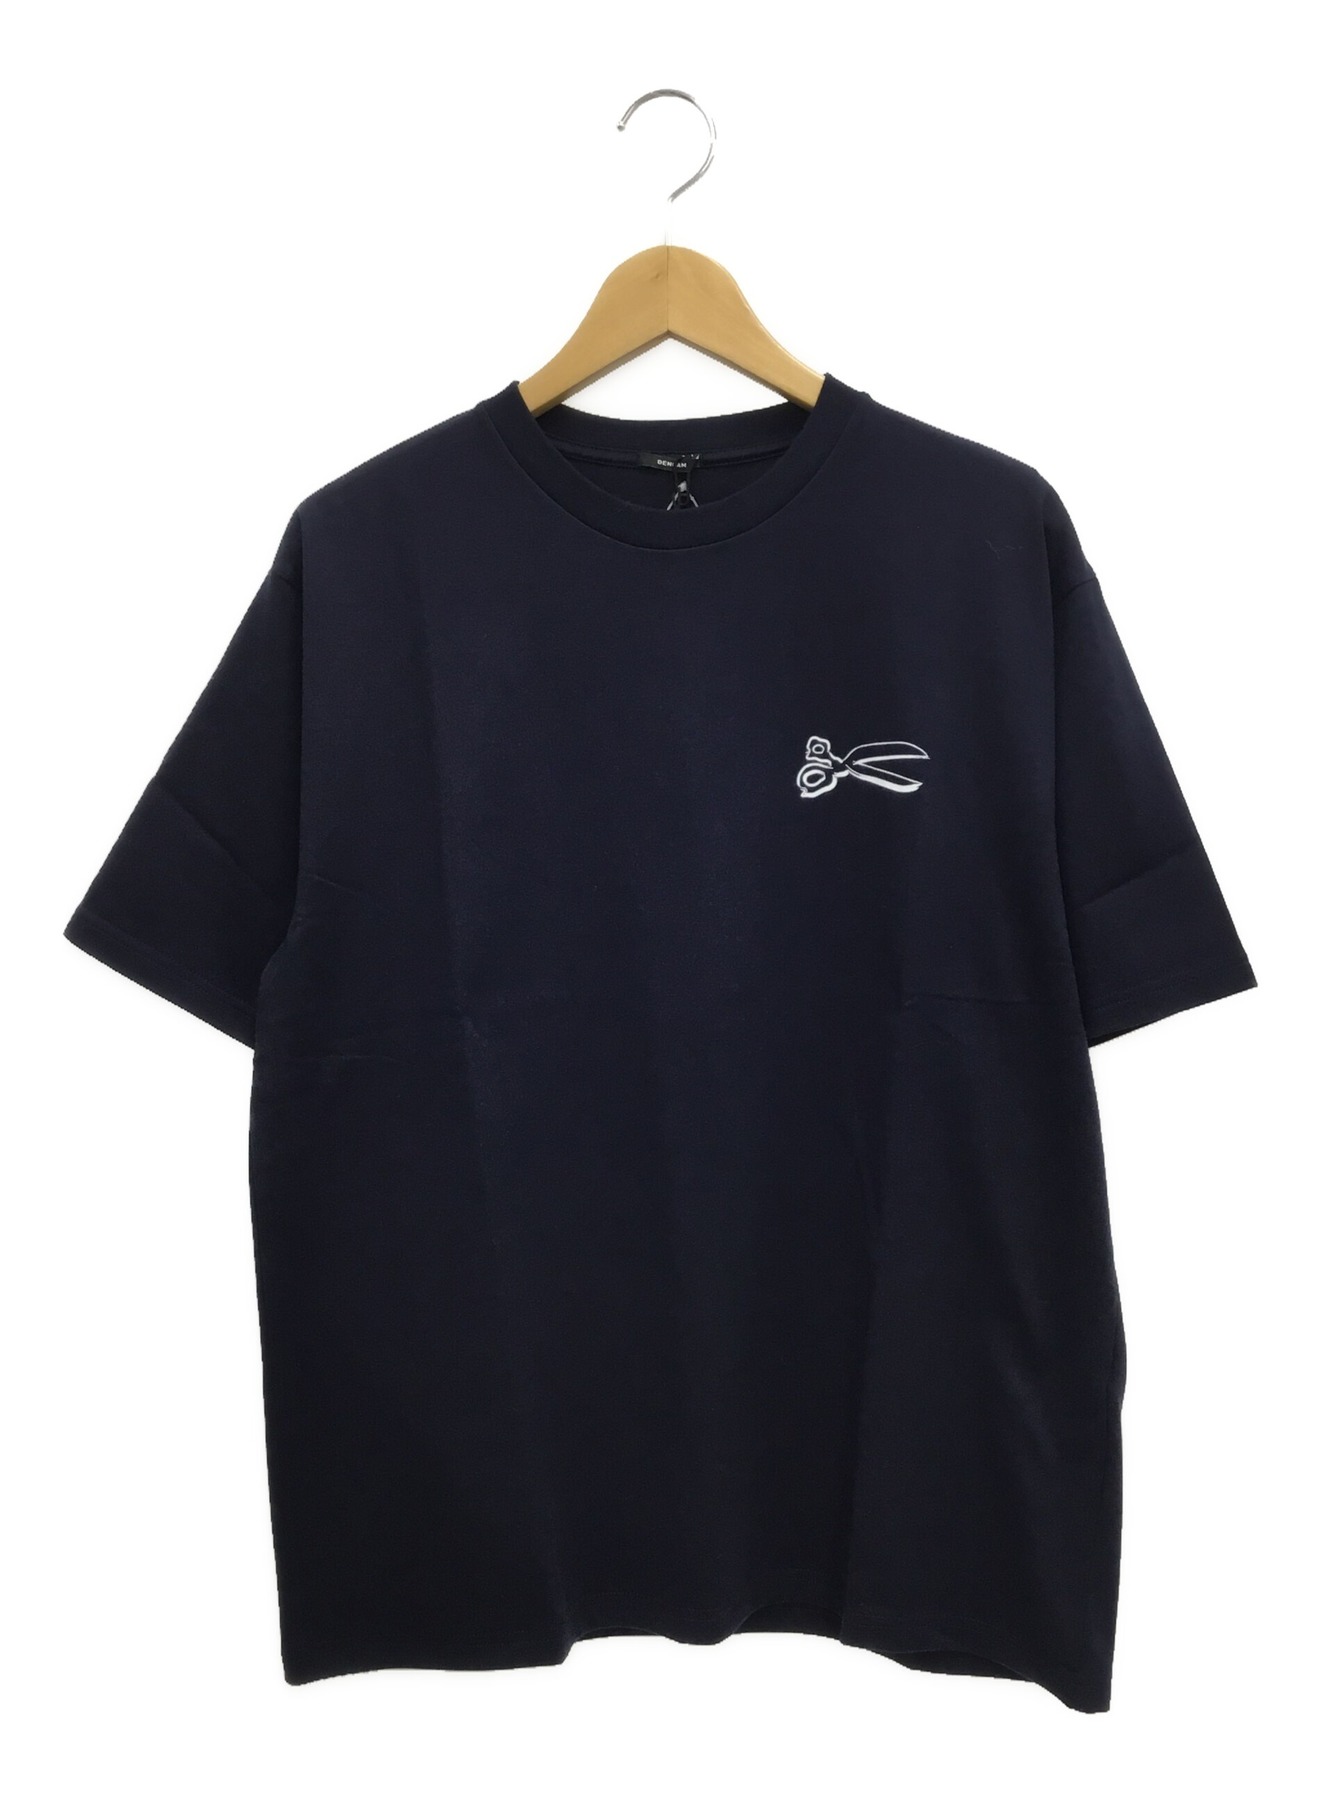 Denham (デンハム) Tシャツ ネイビー サイズ:S 未使用品